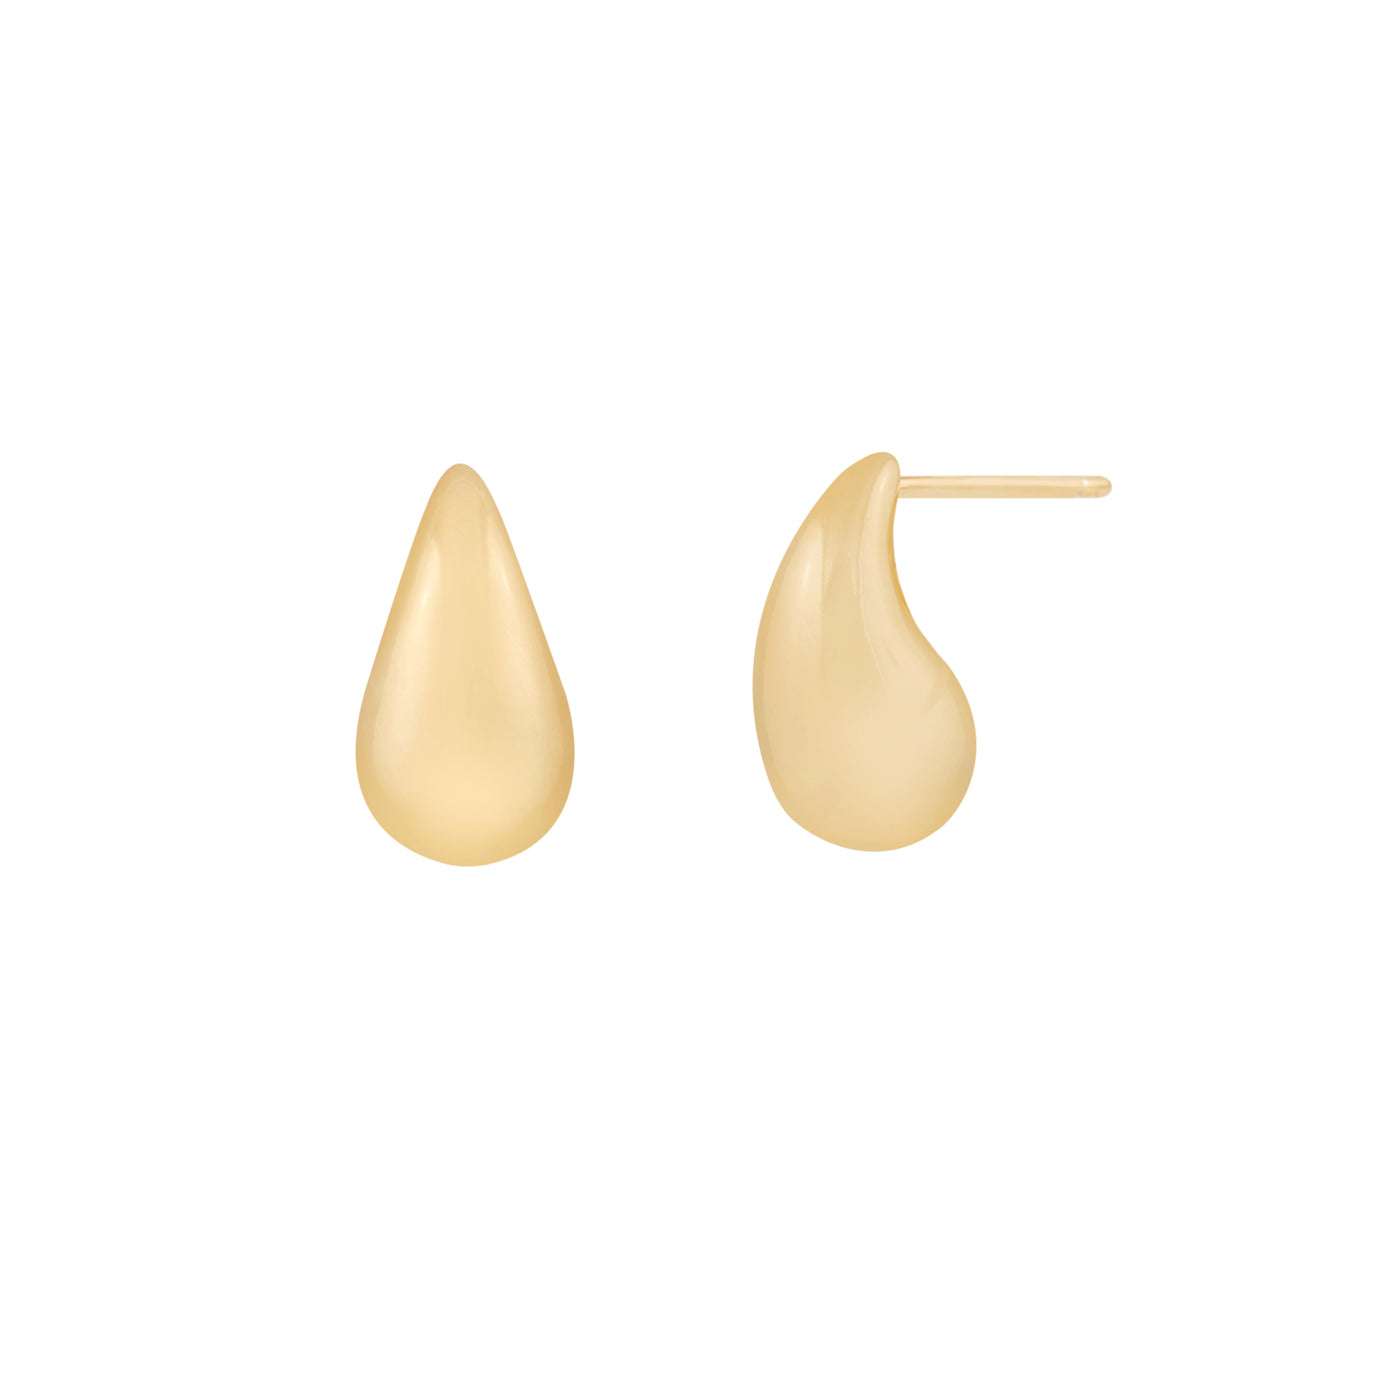 Mon Amour Earrings - Gold Vermeil Mon Amour Earrings - Gold Vermeil